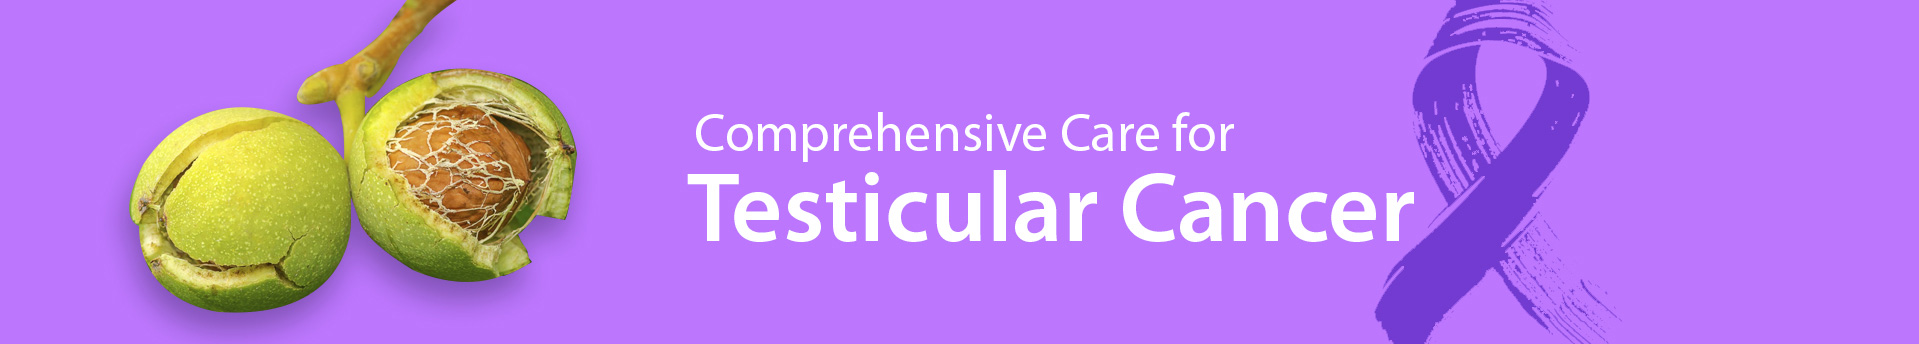 Medicaoncology Testicular Cancer